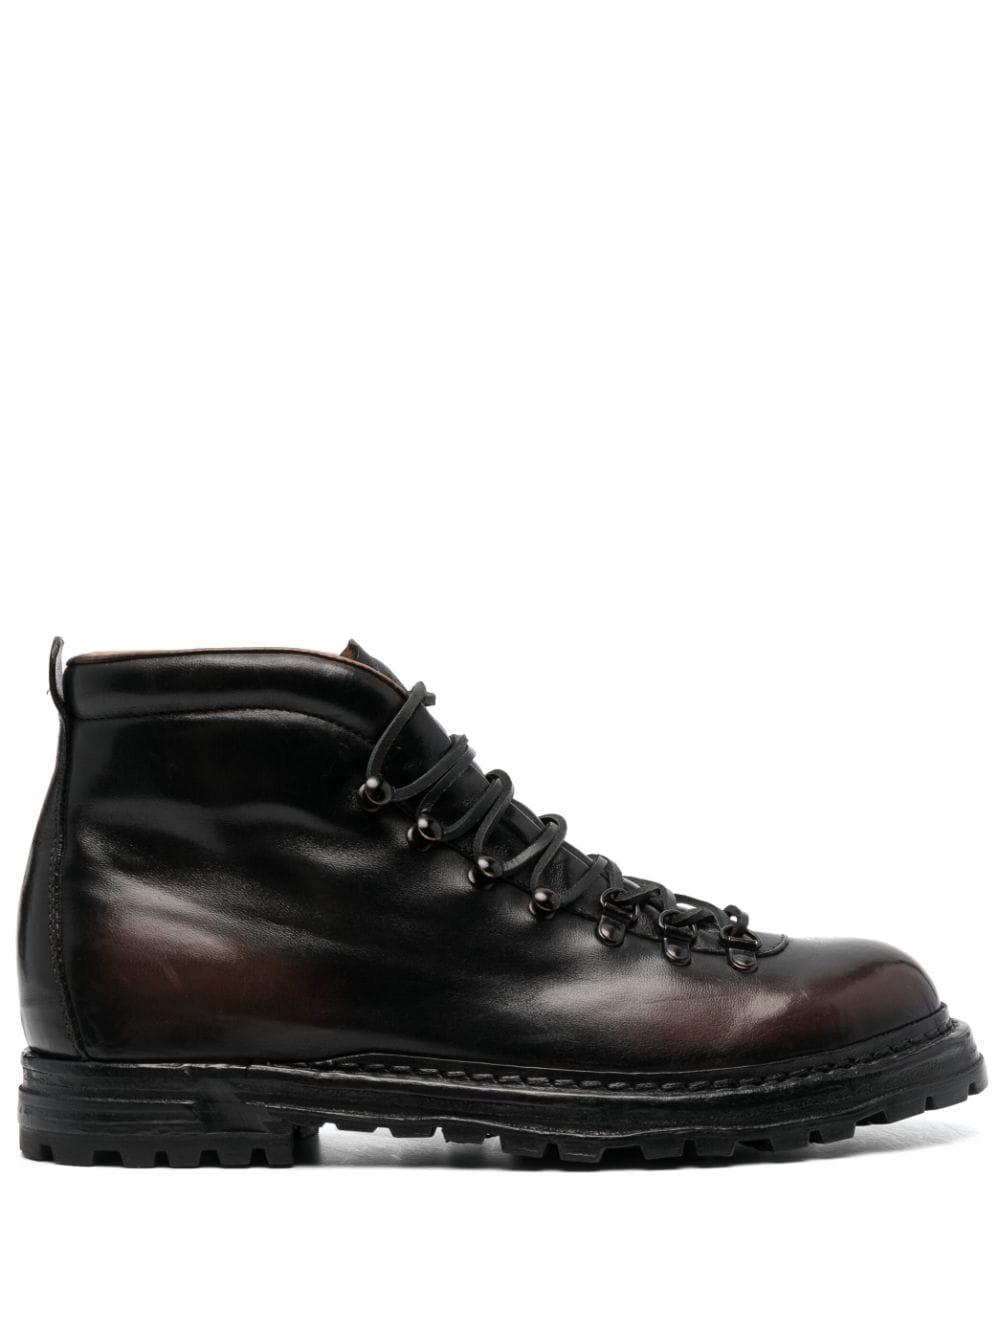 Officine Creative Artik 001 Leather Boots in Black for Men | Lyst